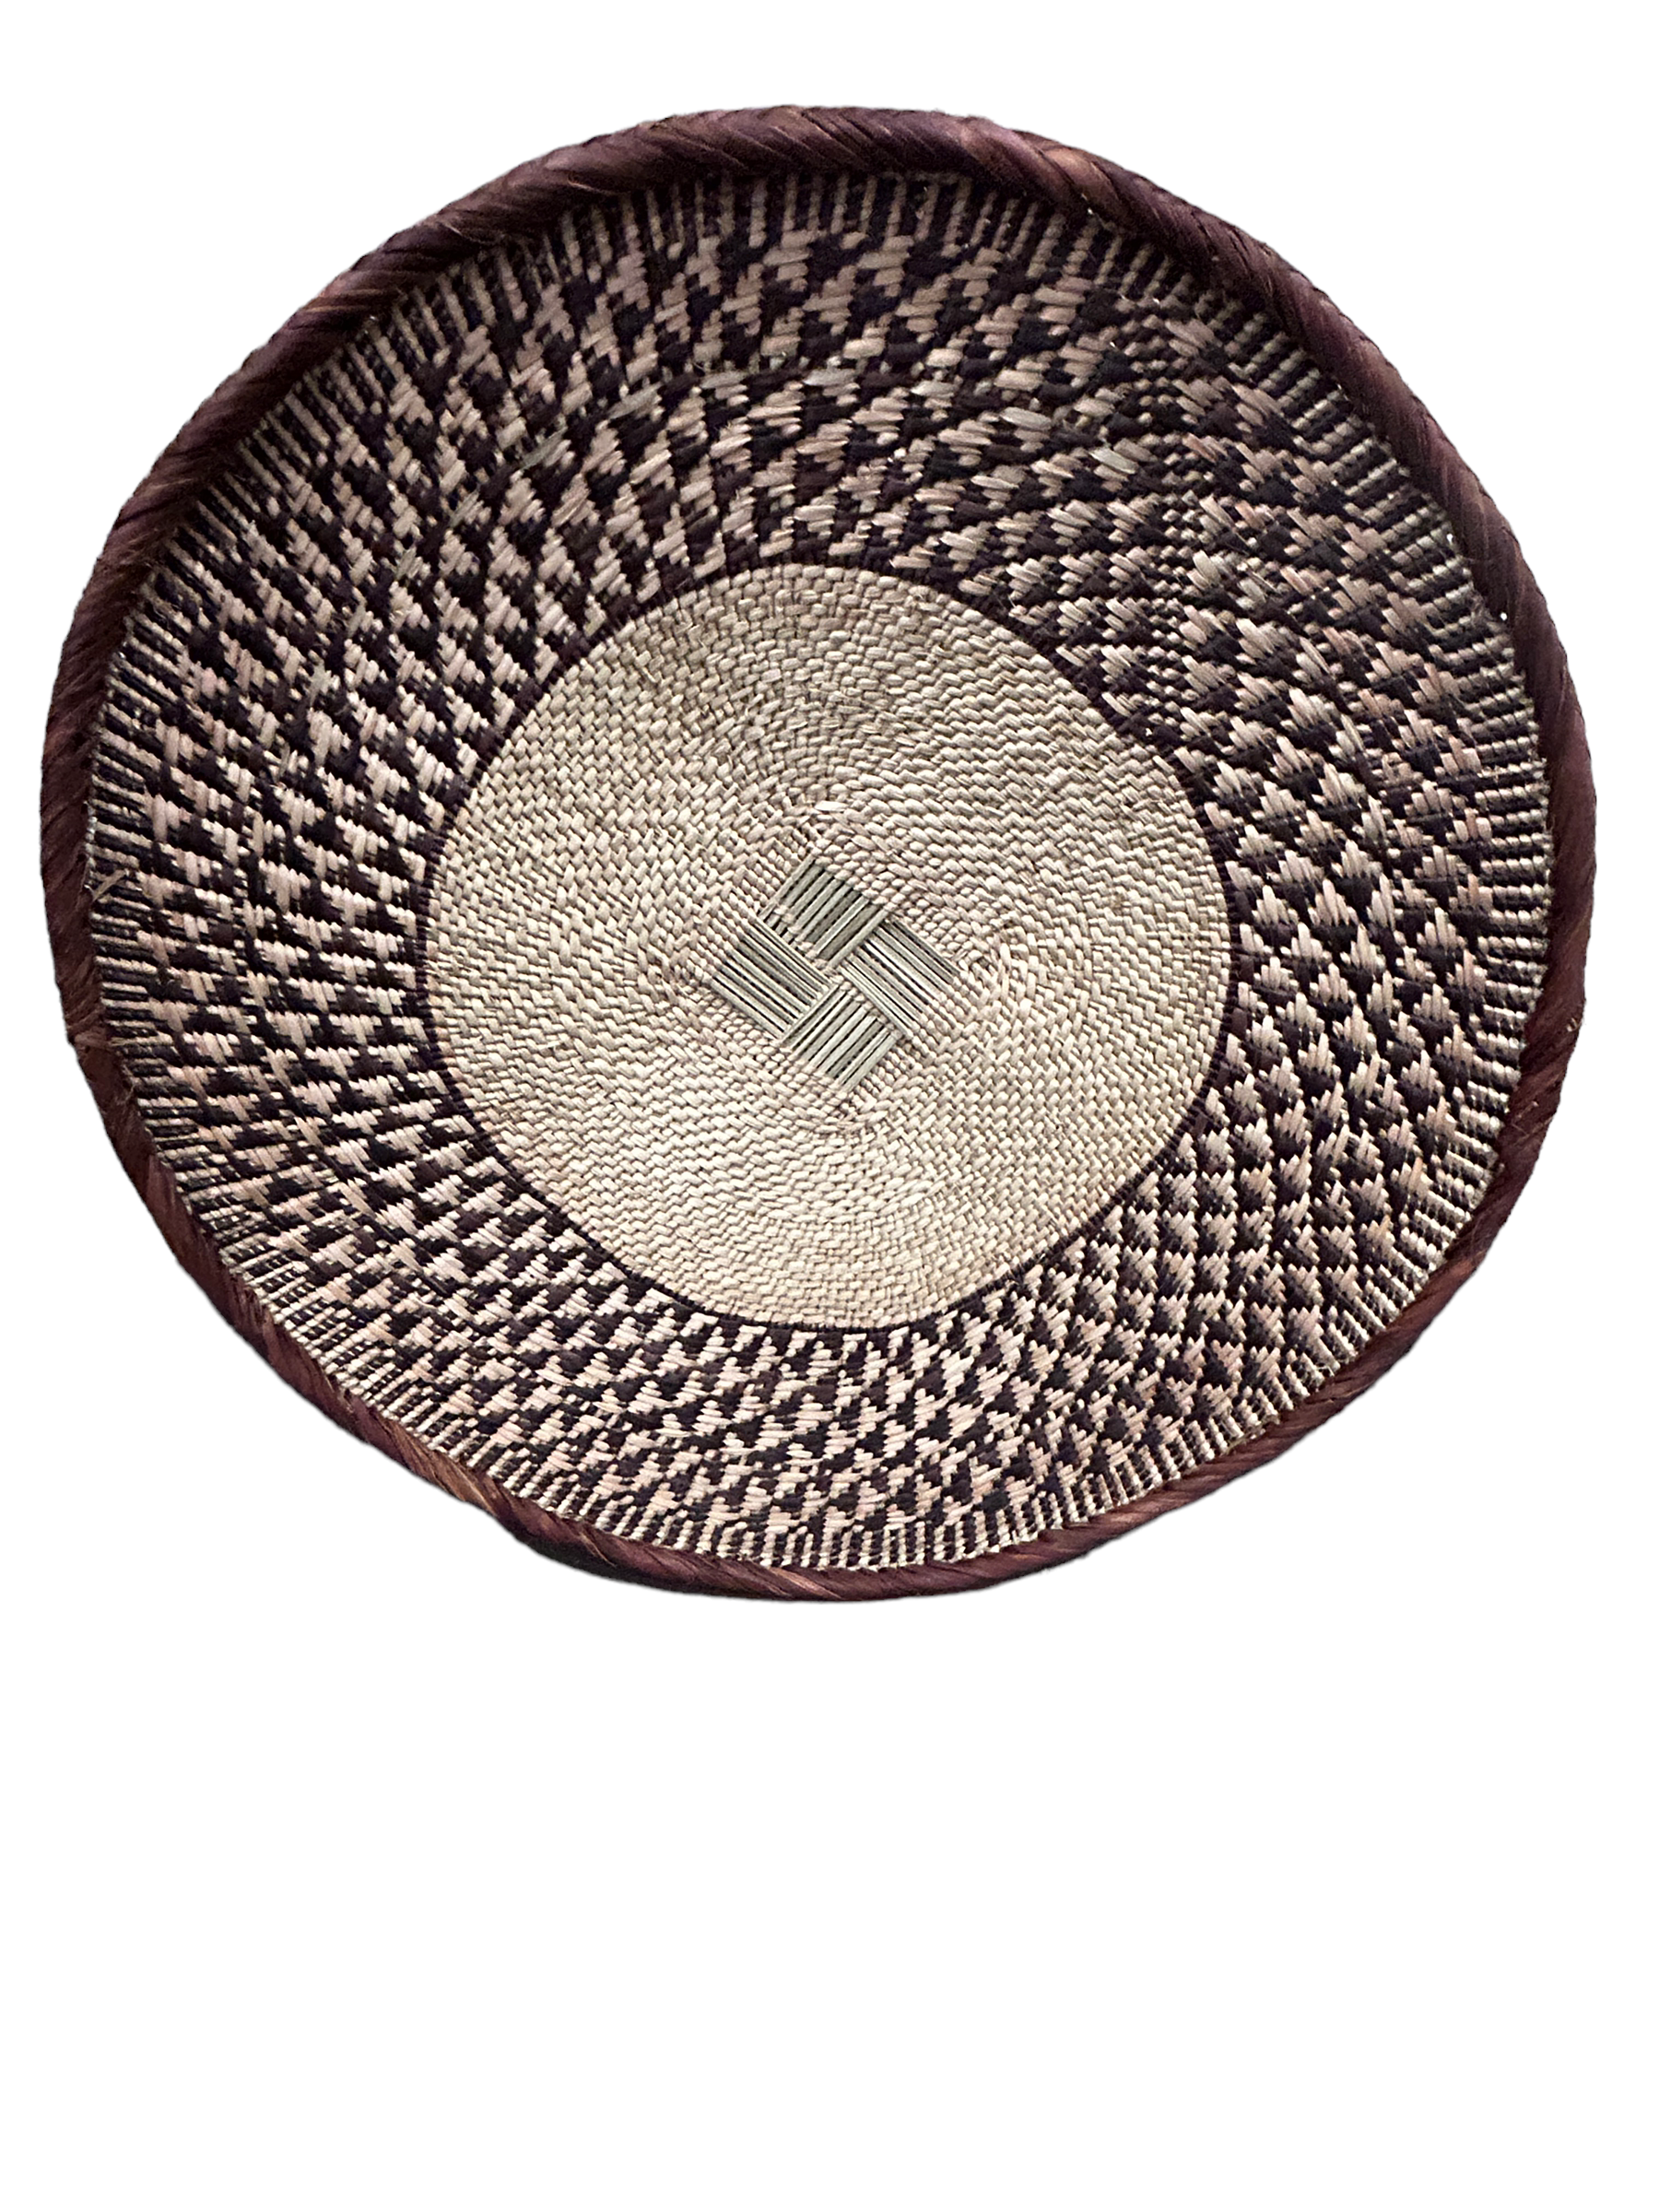 botanicalboysuk Tonga Basket Natural (45-18)